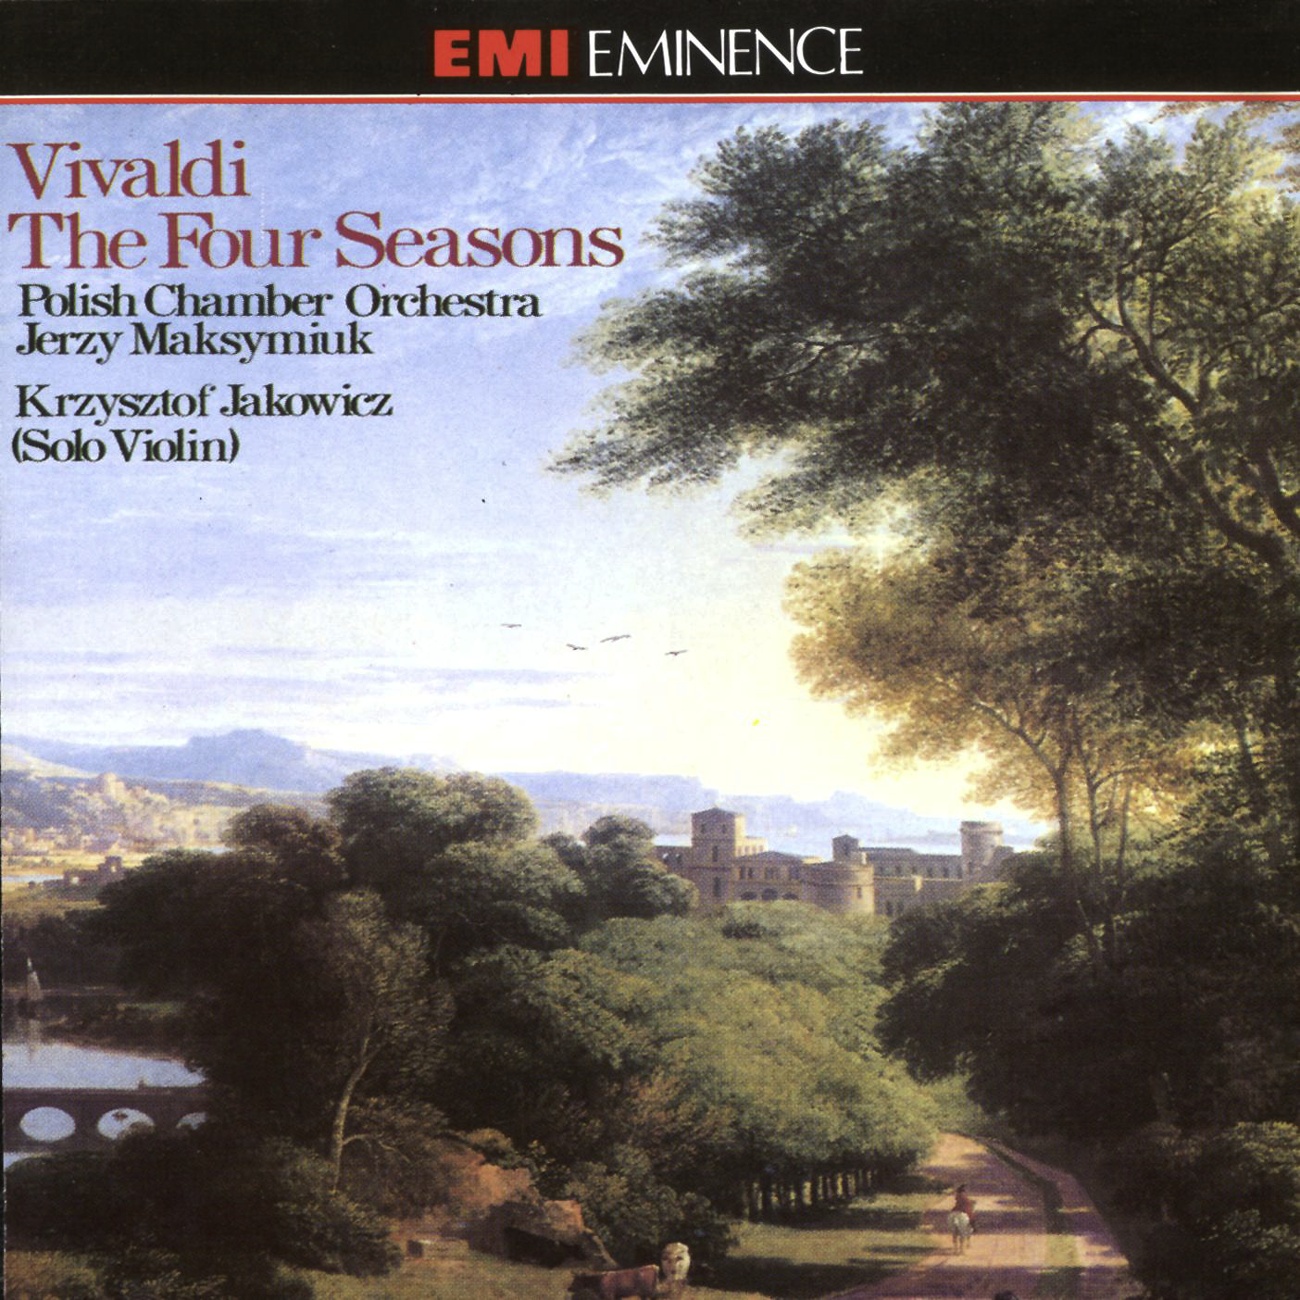 The Four Seasons Op. 8 Nos. 1-4 (1990 Digital Remaster), Concerto No. 4 in F minor (L'inverno/ Winter) RV297 (Op. 8 No. 4): I.